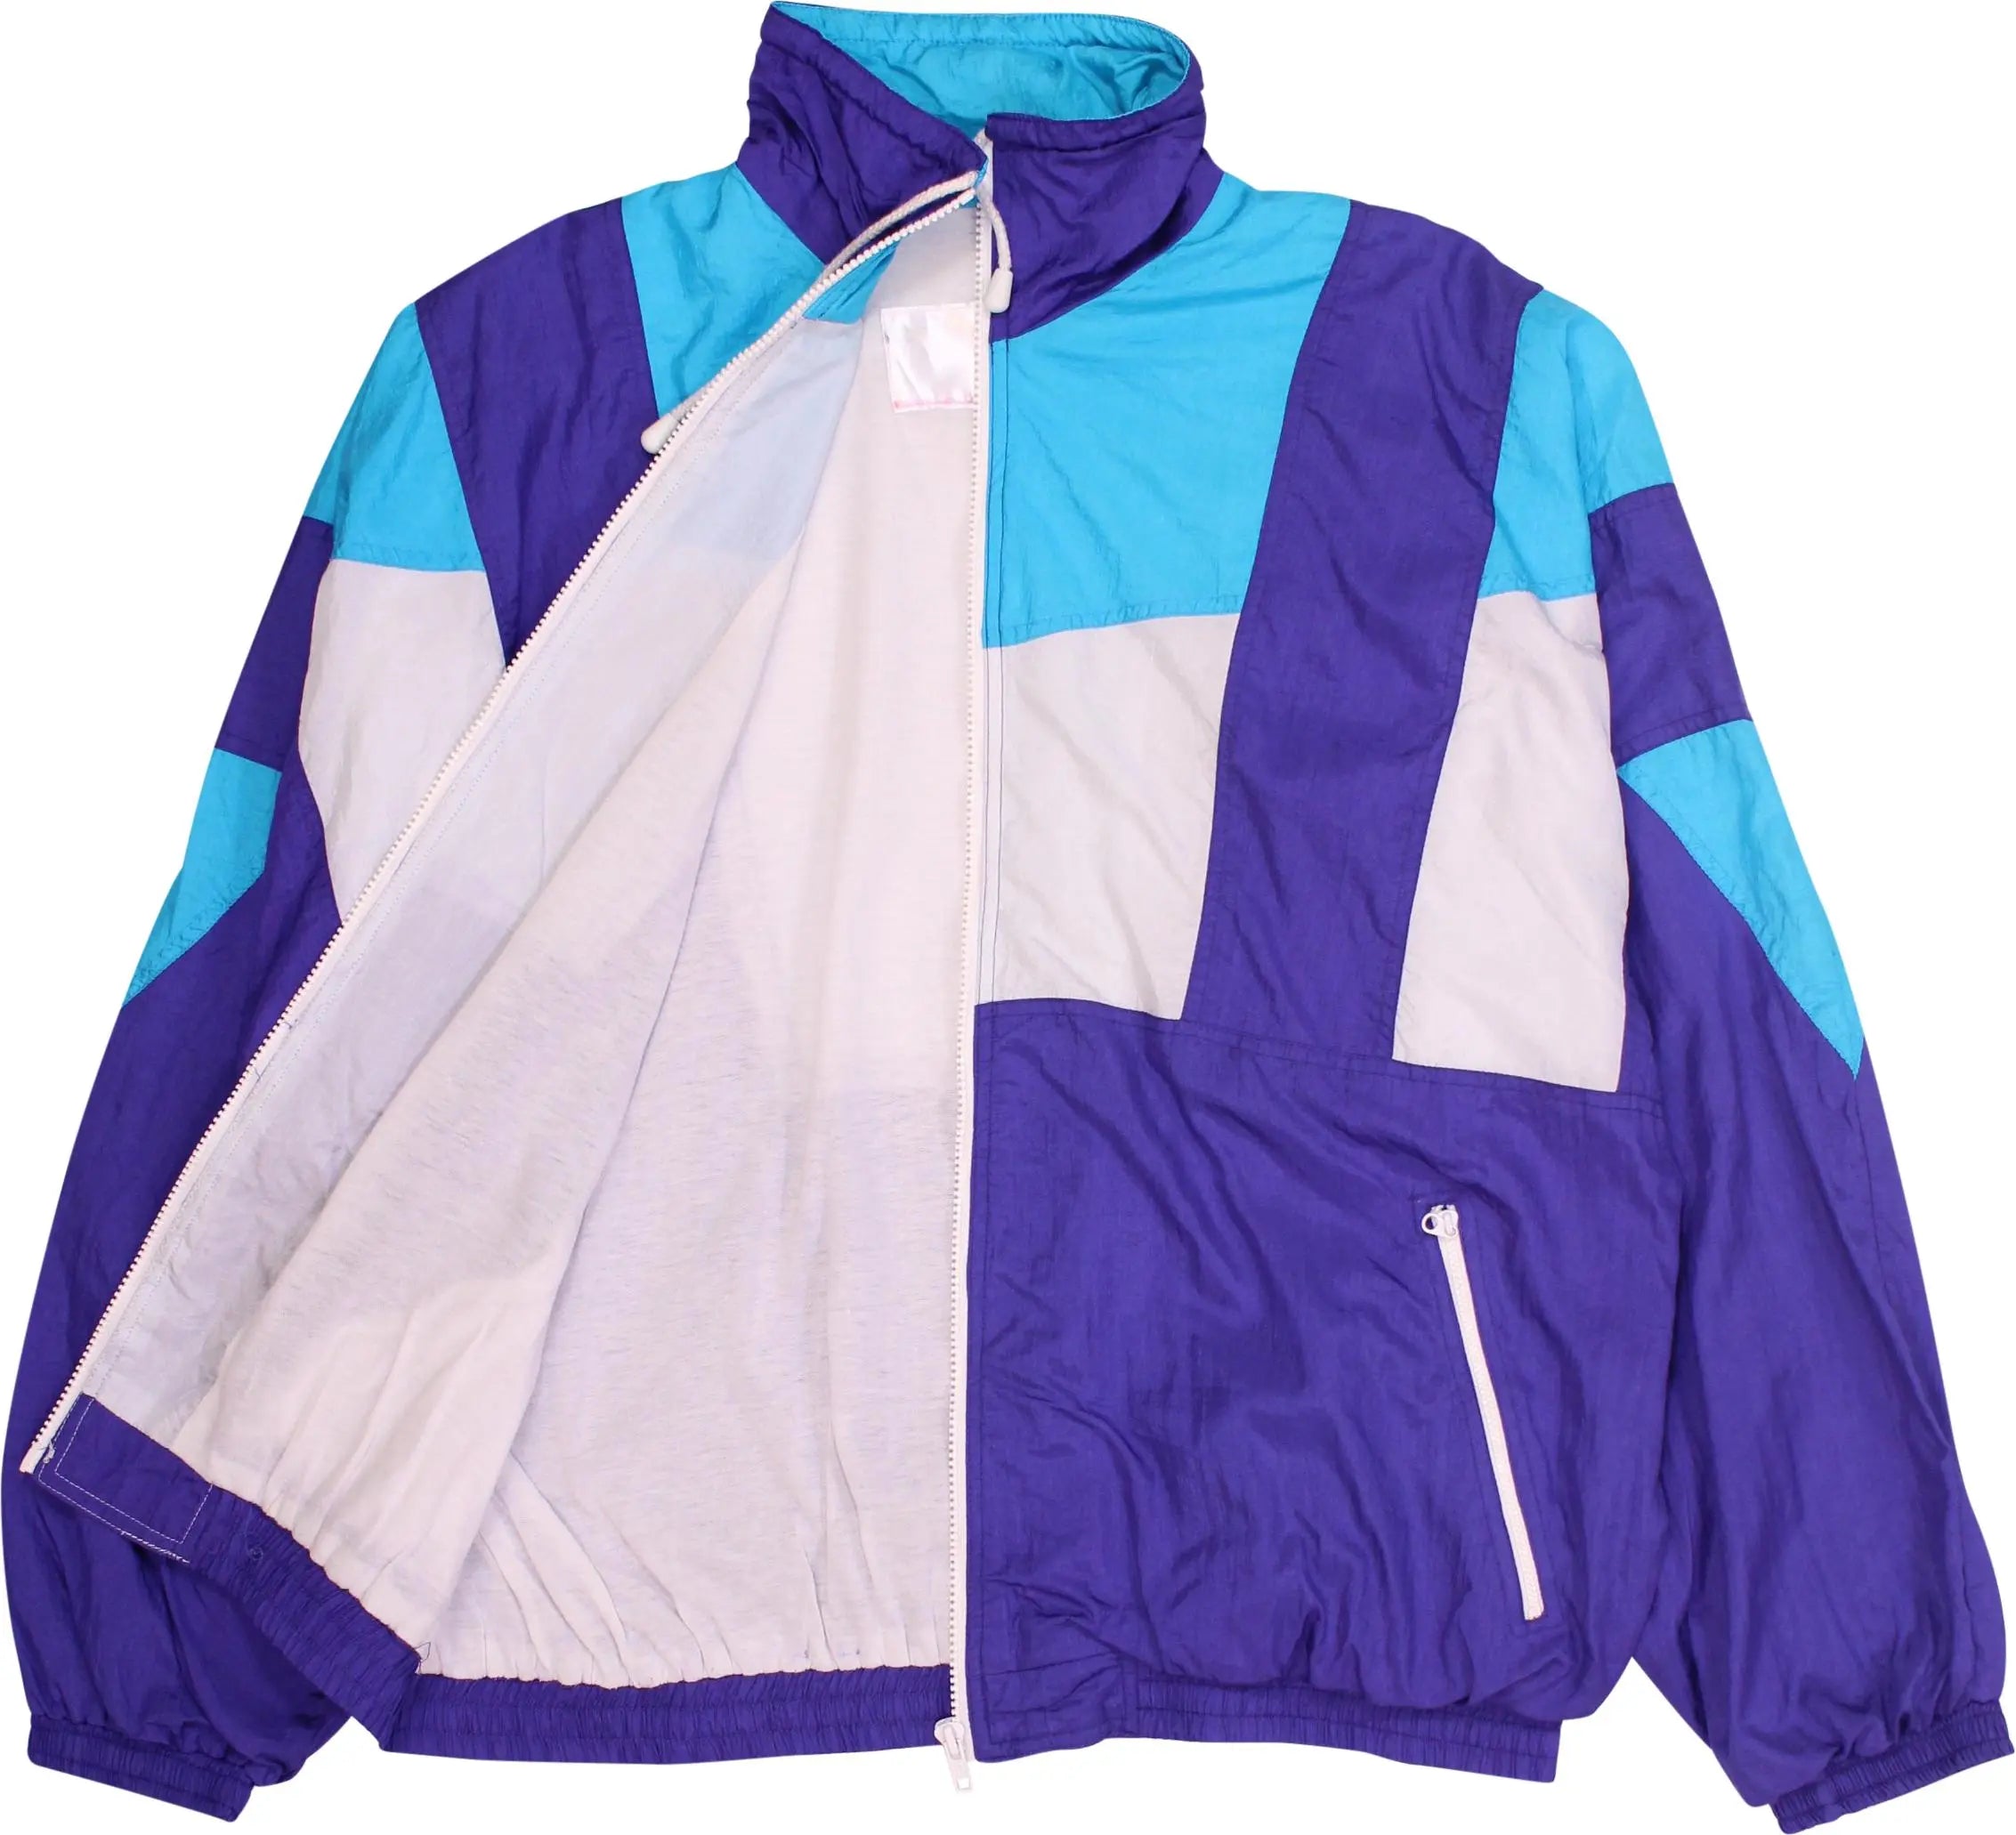 Novi Sport - 80s/90s Windbreaker- ThriftTale.com - Vintage and second handclothing